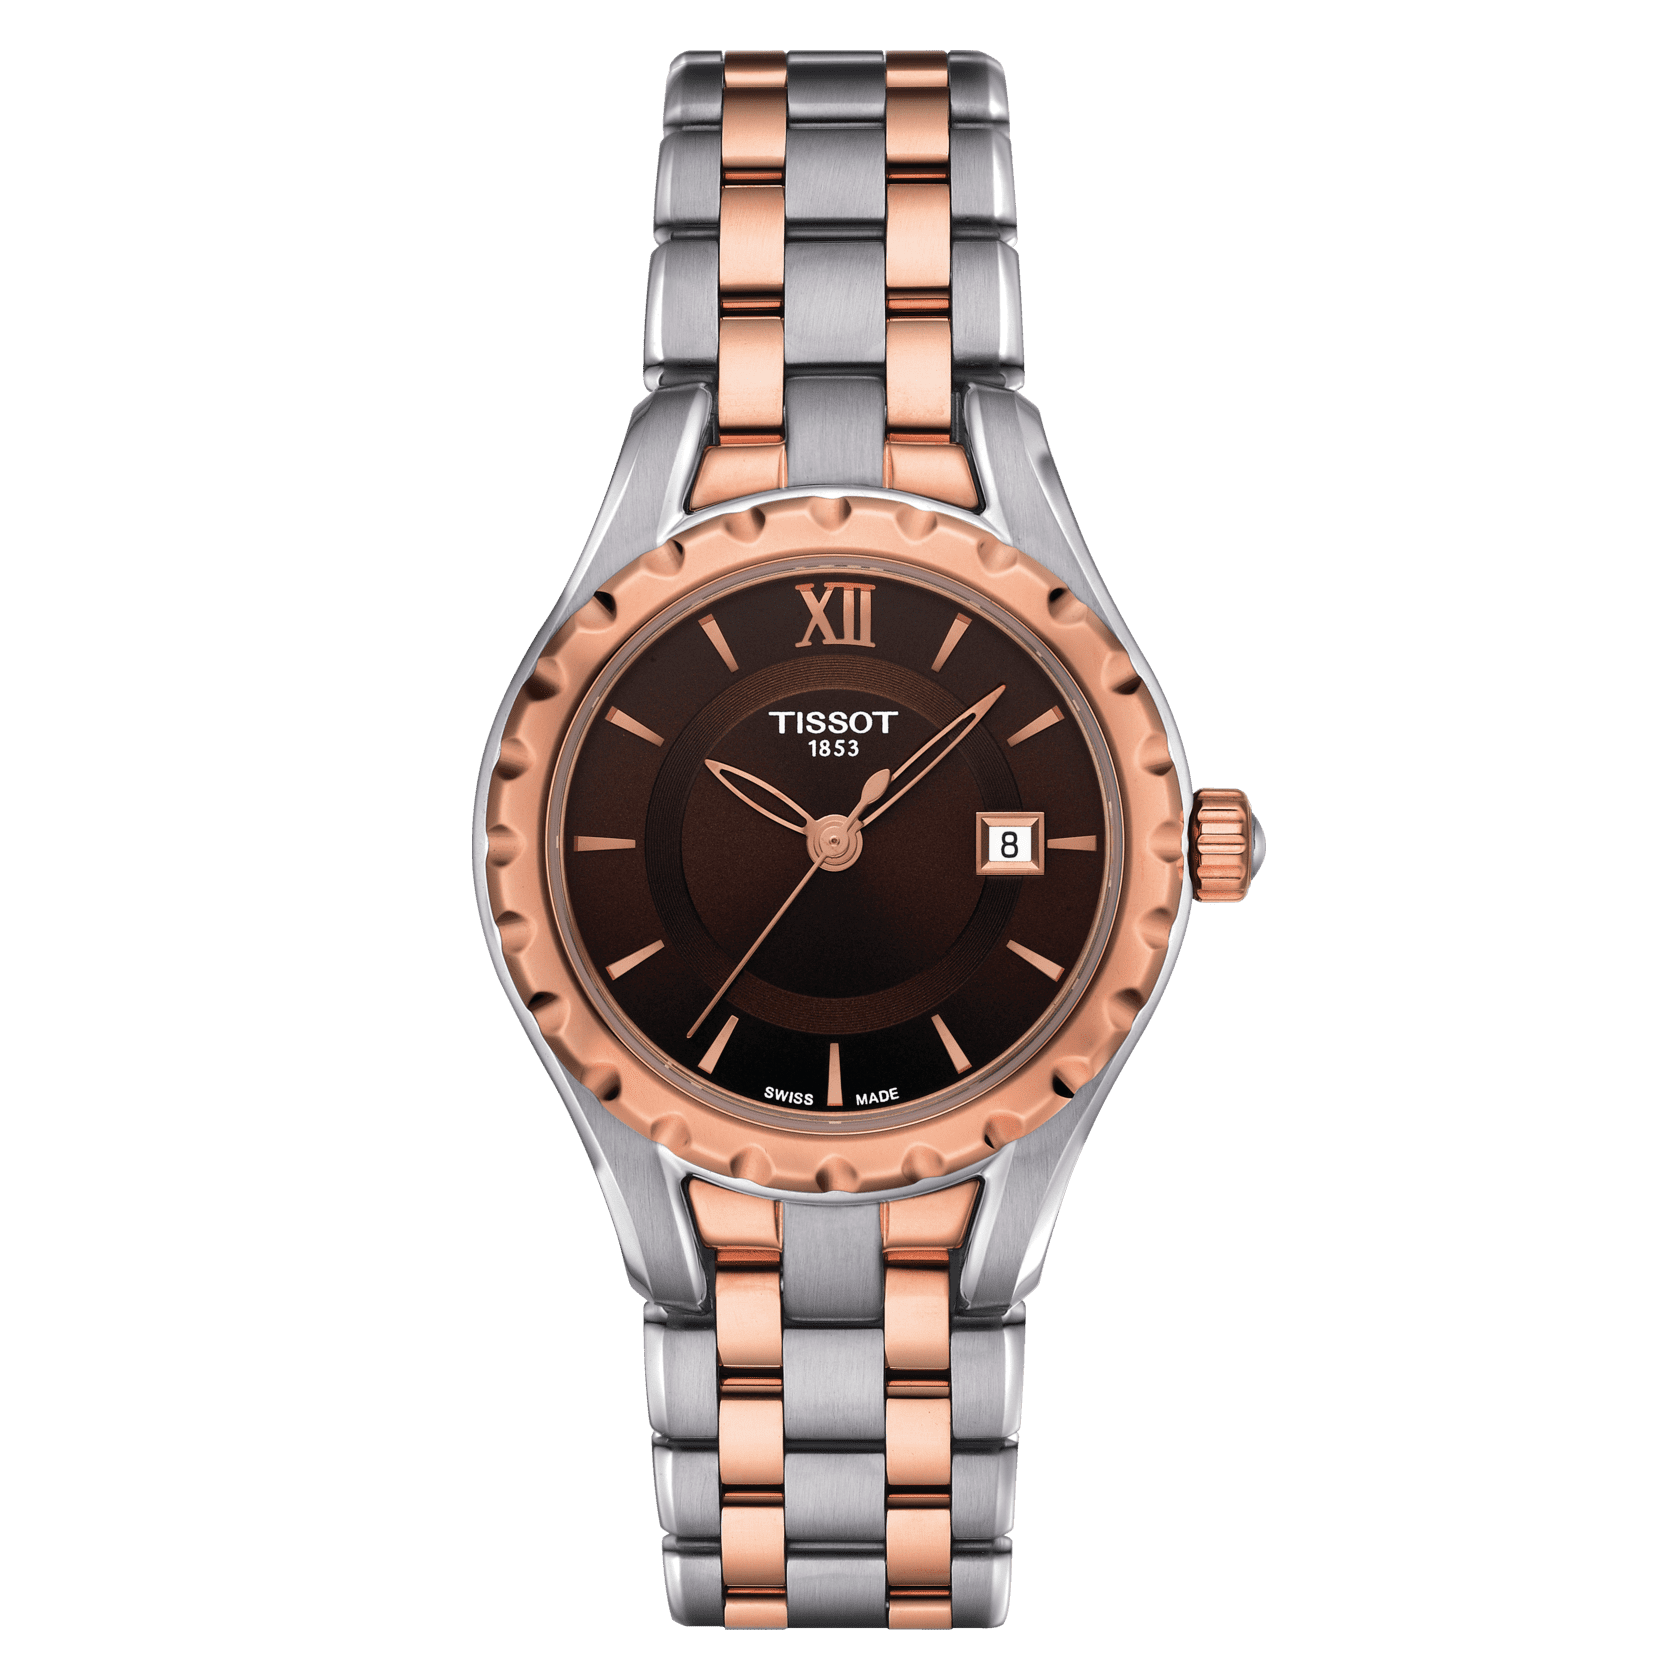 Replica Cartier Watch Forum